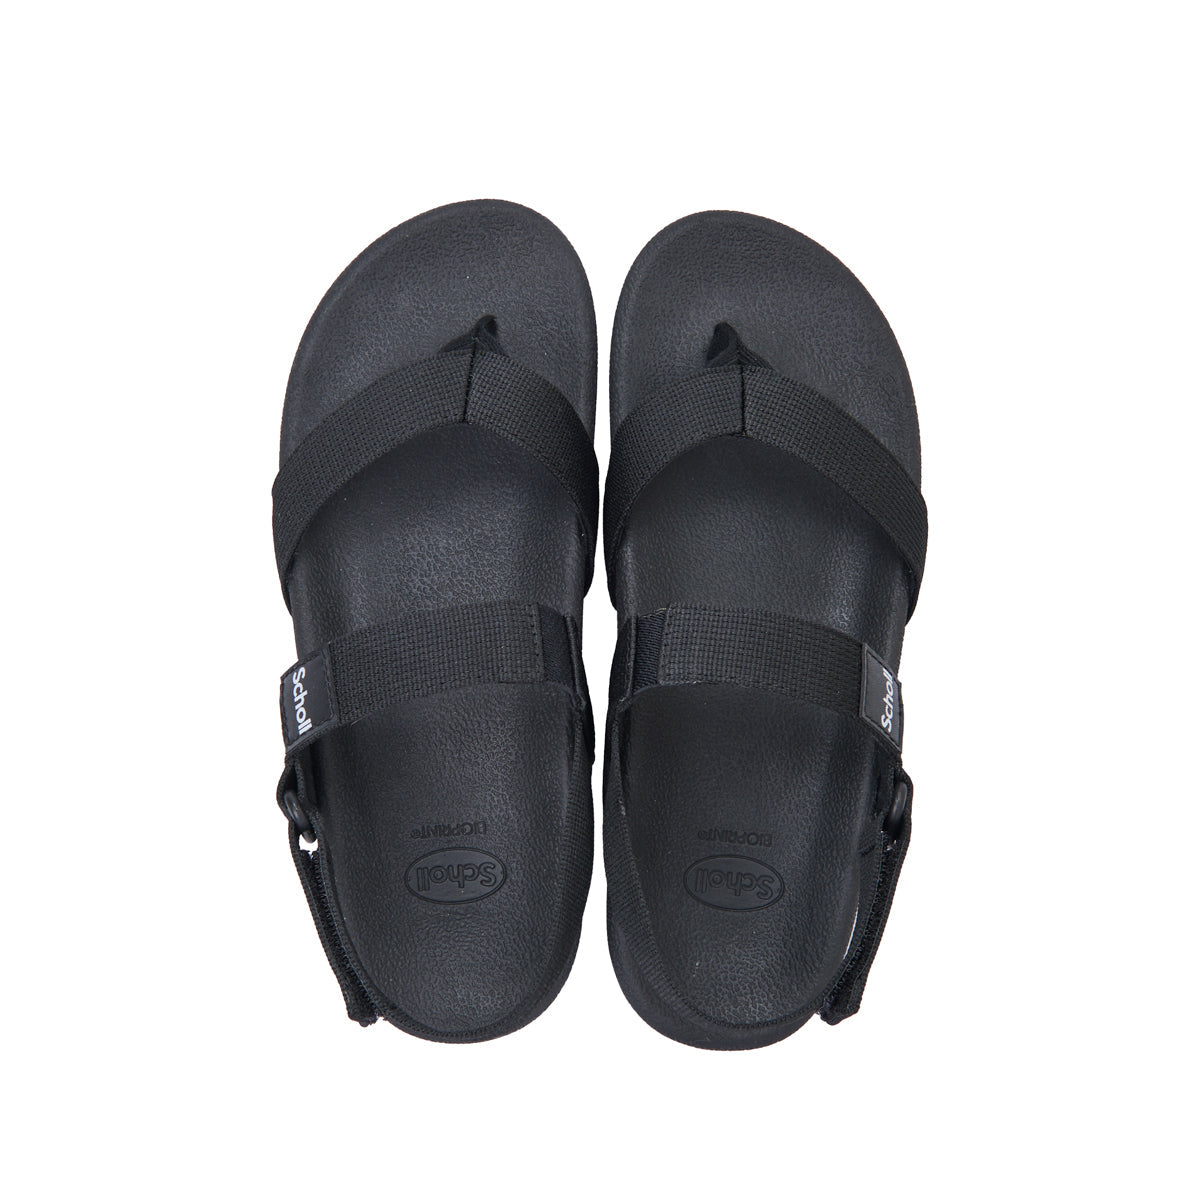 Everly Black เอฟเวอรี่ สีดำ - Scholl Shoes Thailand